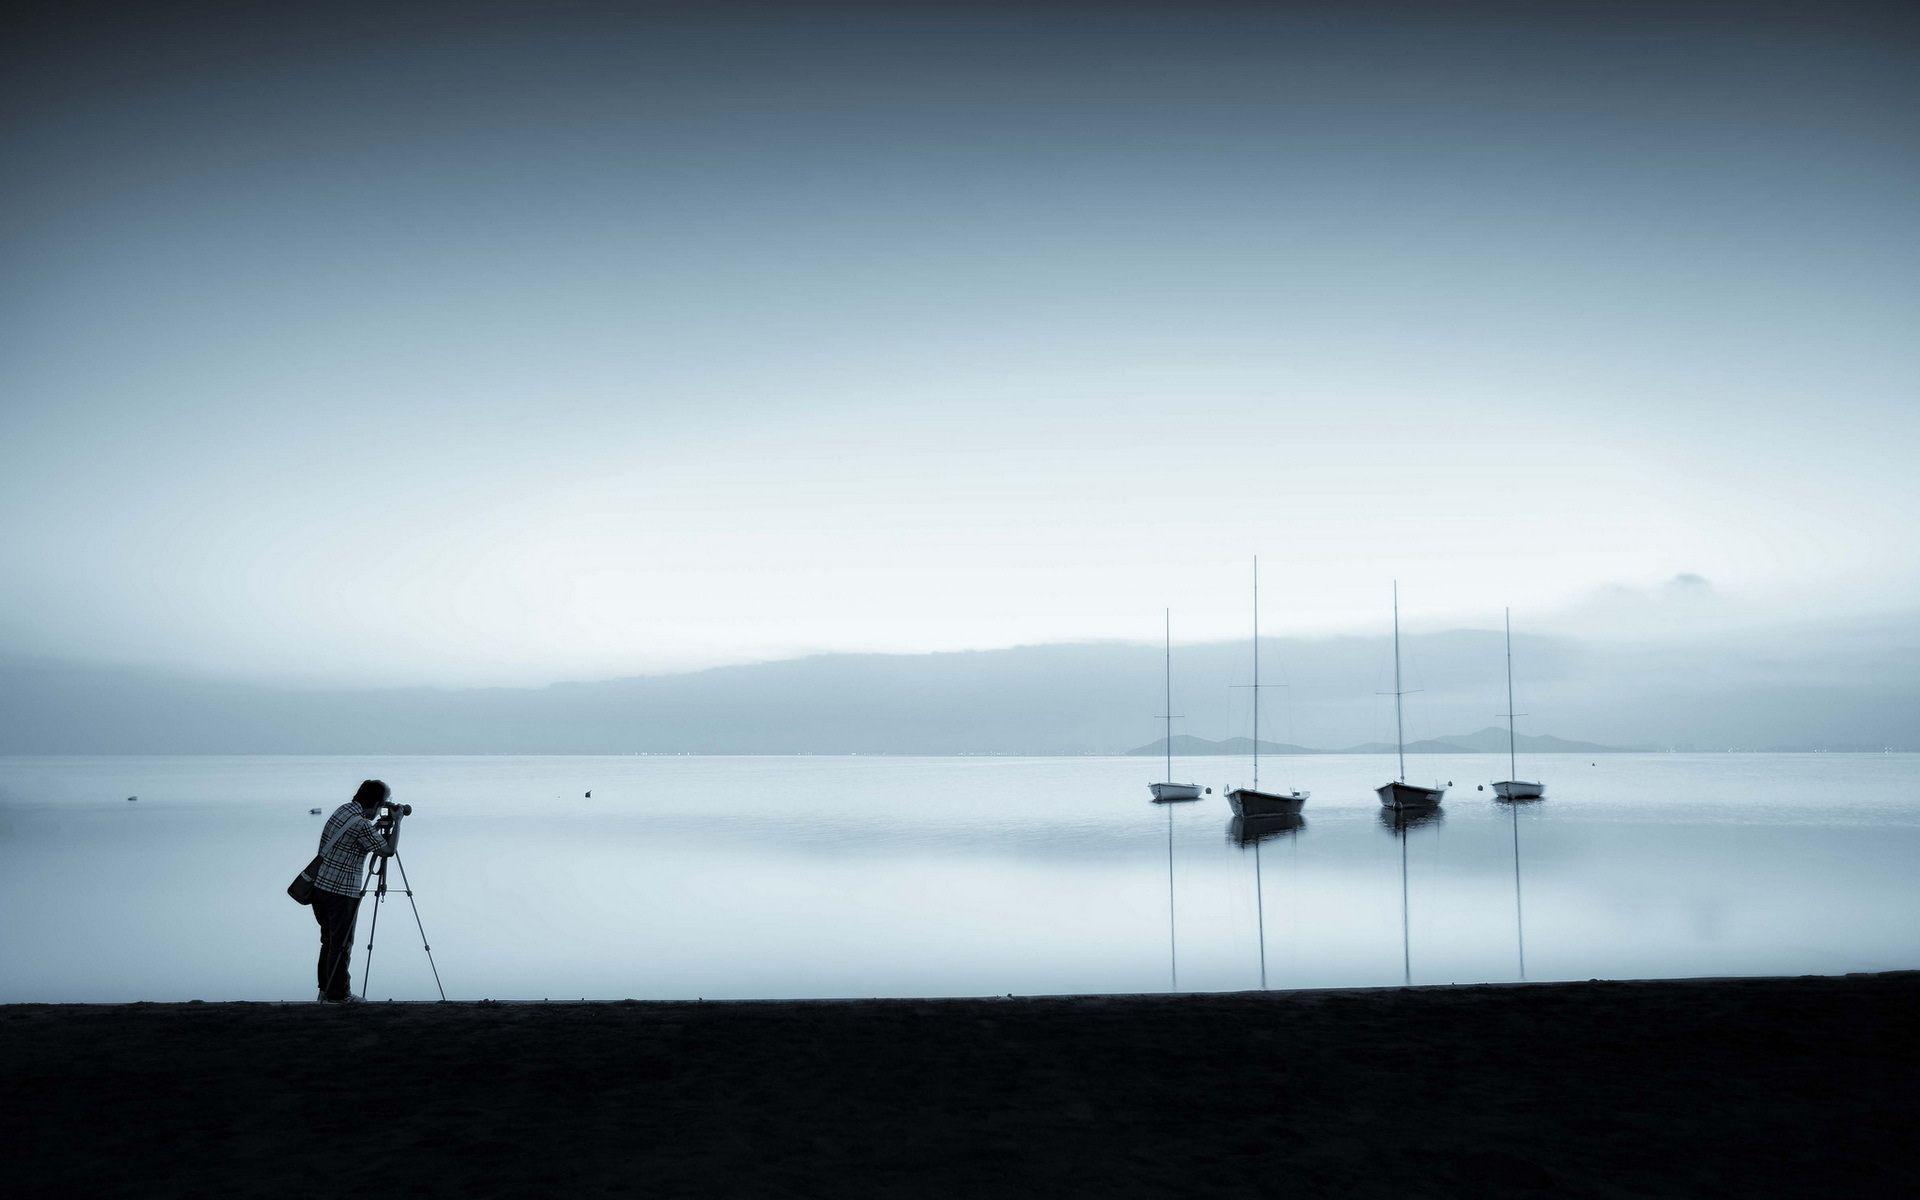 Tech camera photographer photography lakes reflections boats mood